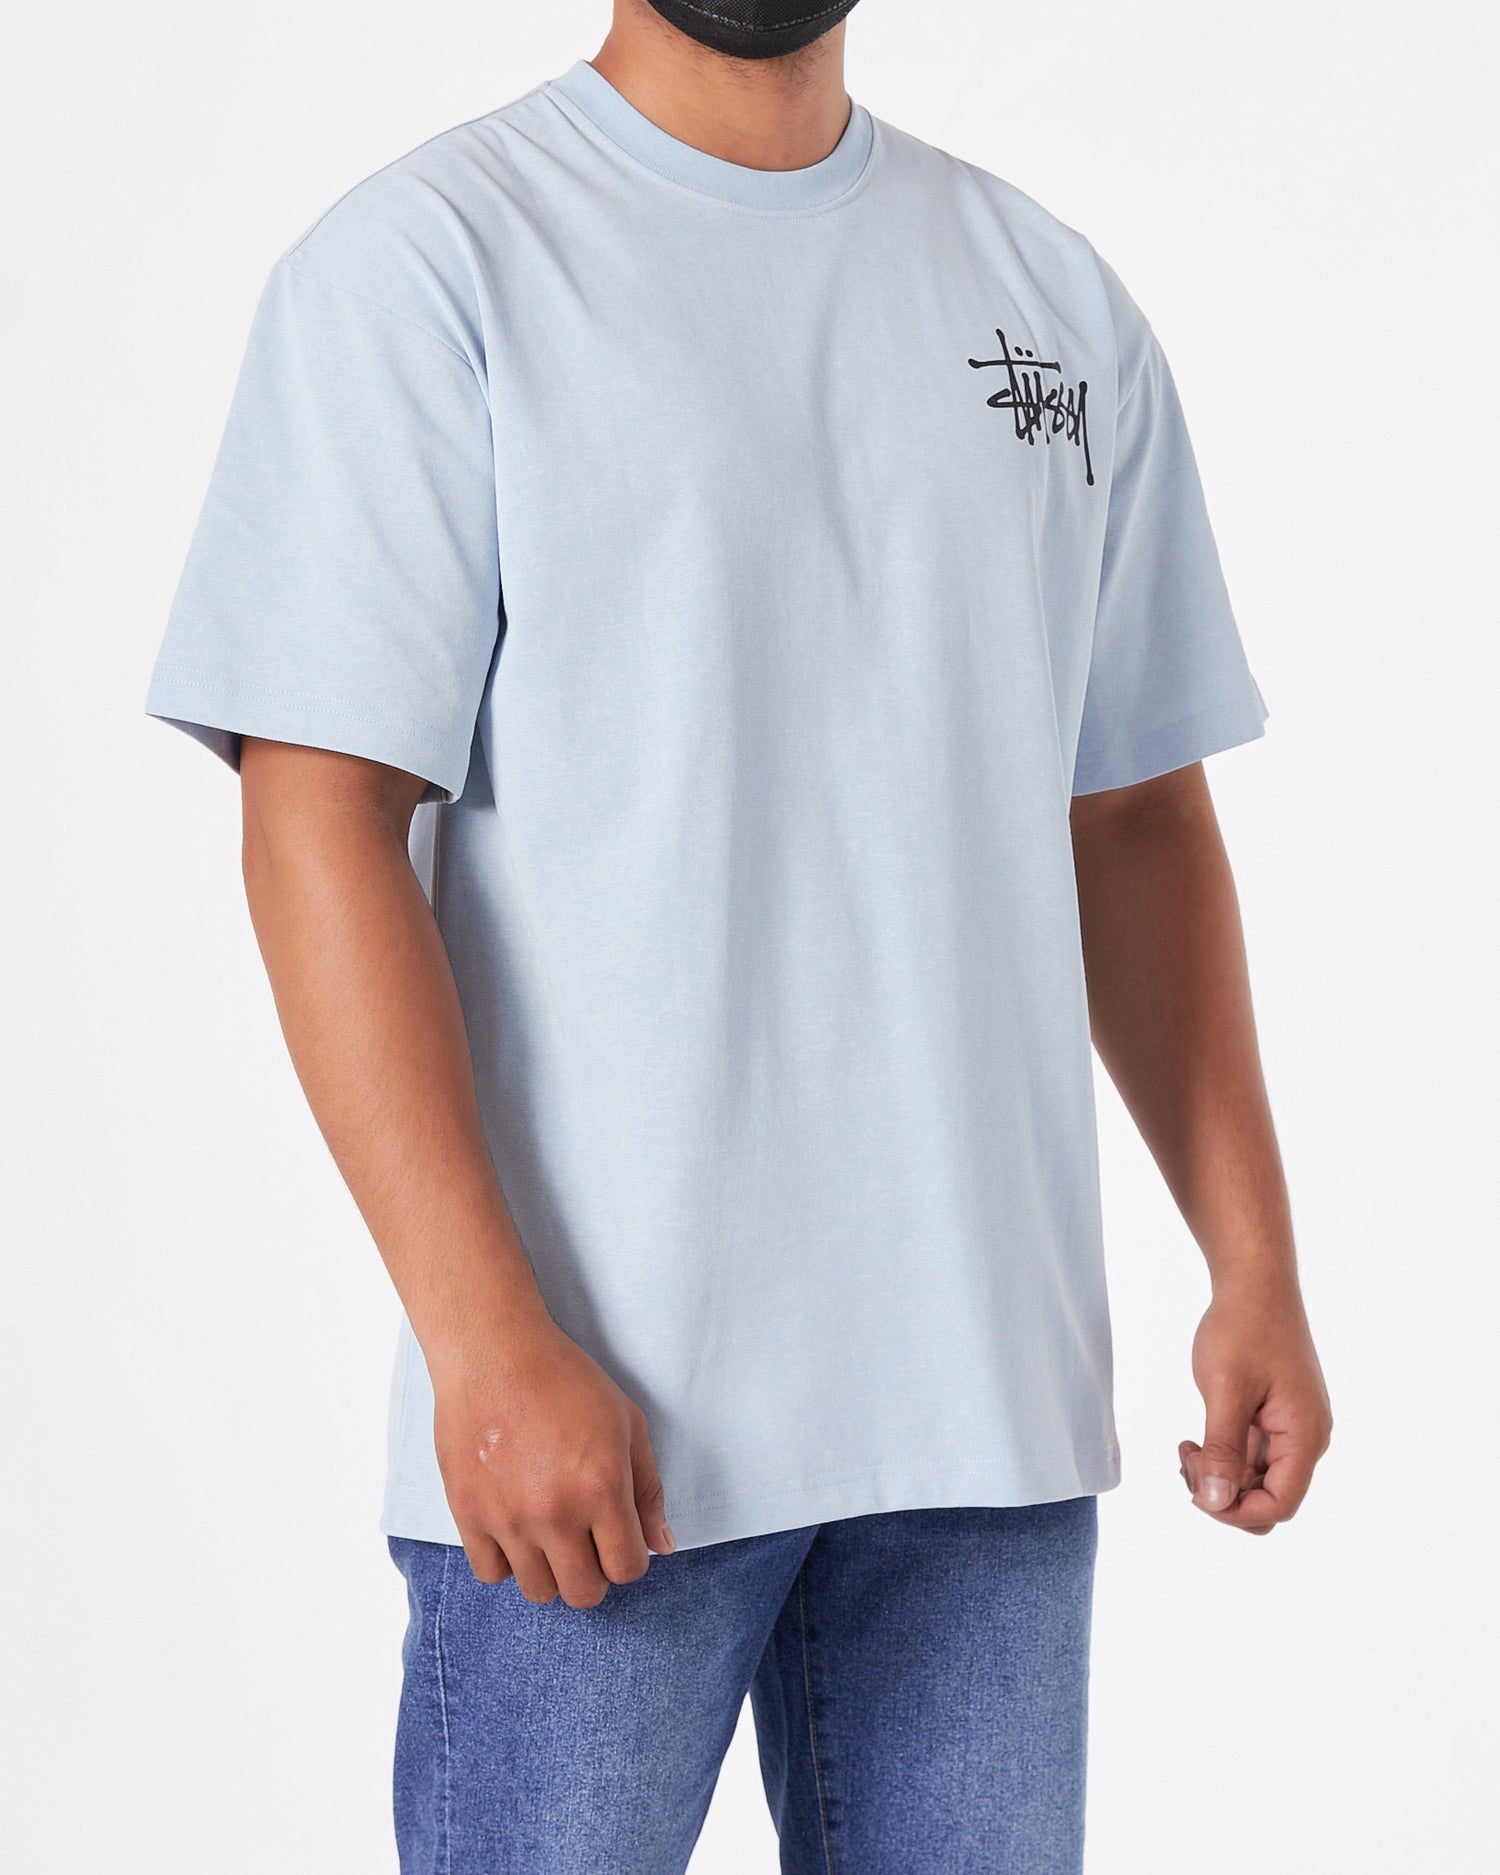 STU Back Logo Printed Men White T-Shirt 20.90